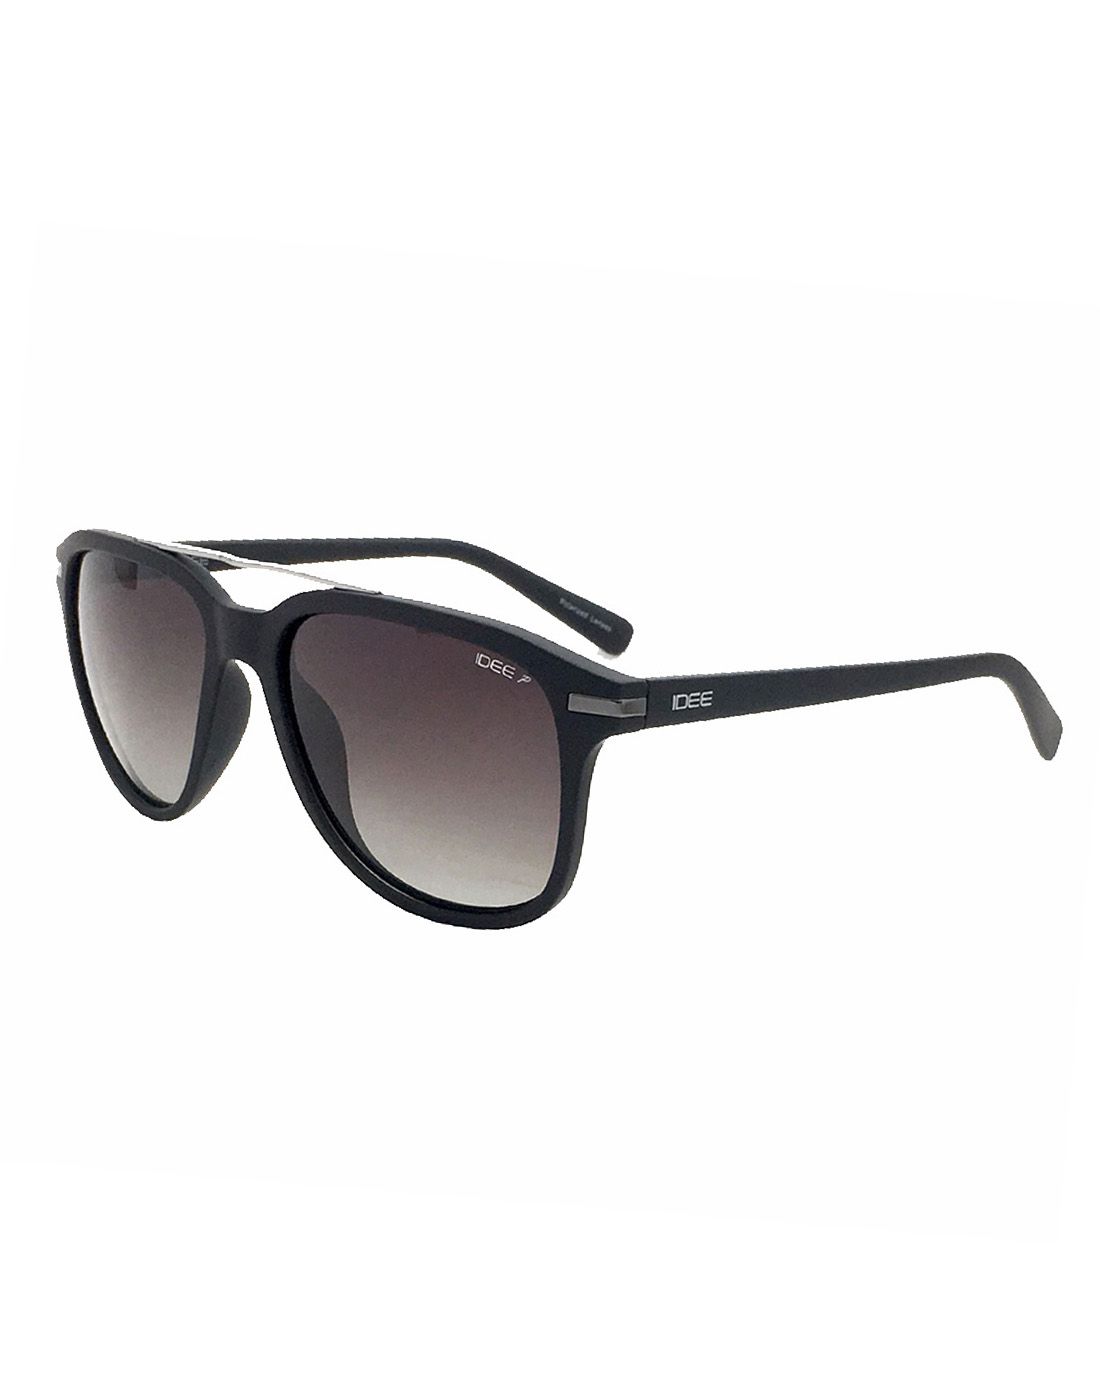 Idee Palette Unique Idee Grey Wayfarer Sunglasses S 2310 C3p 56